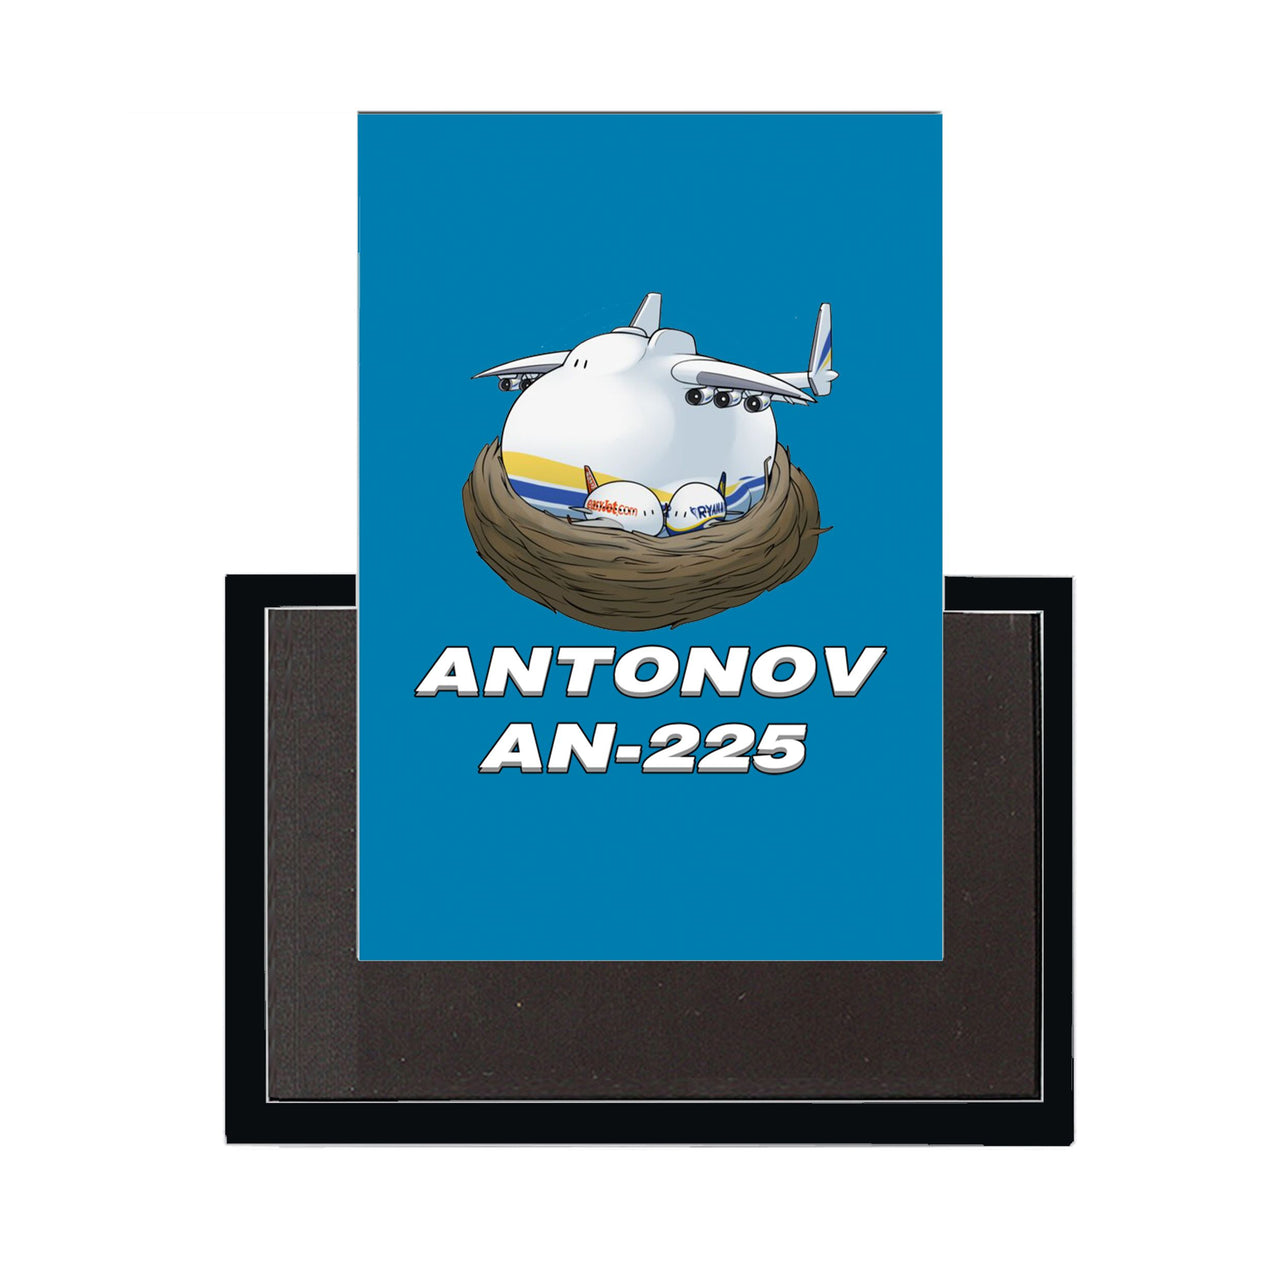 Antonov AN-225 (22) Designed Magnets